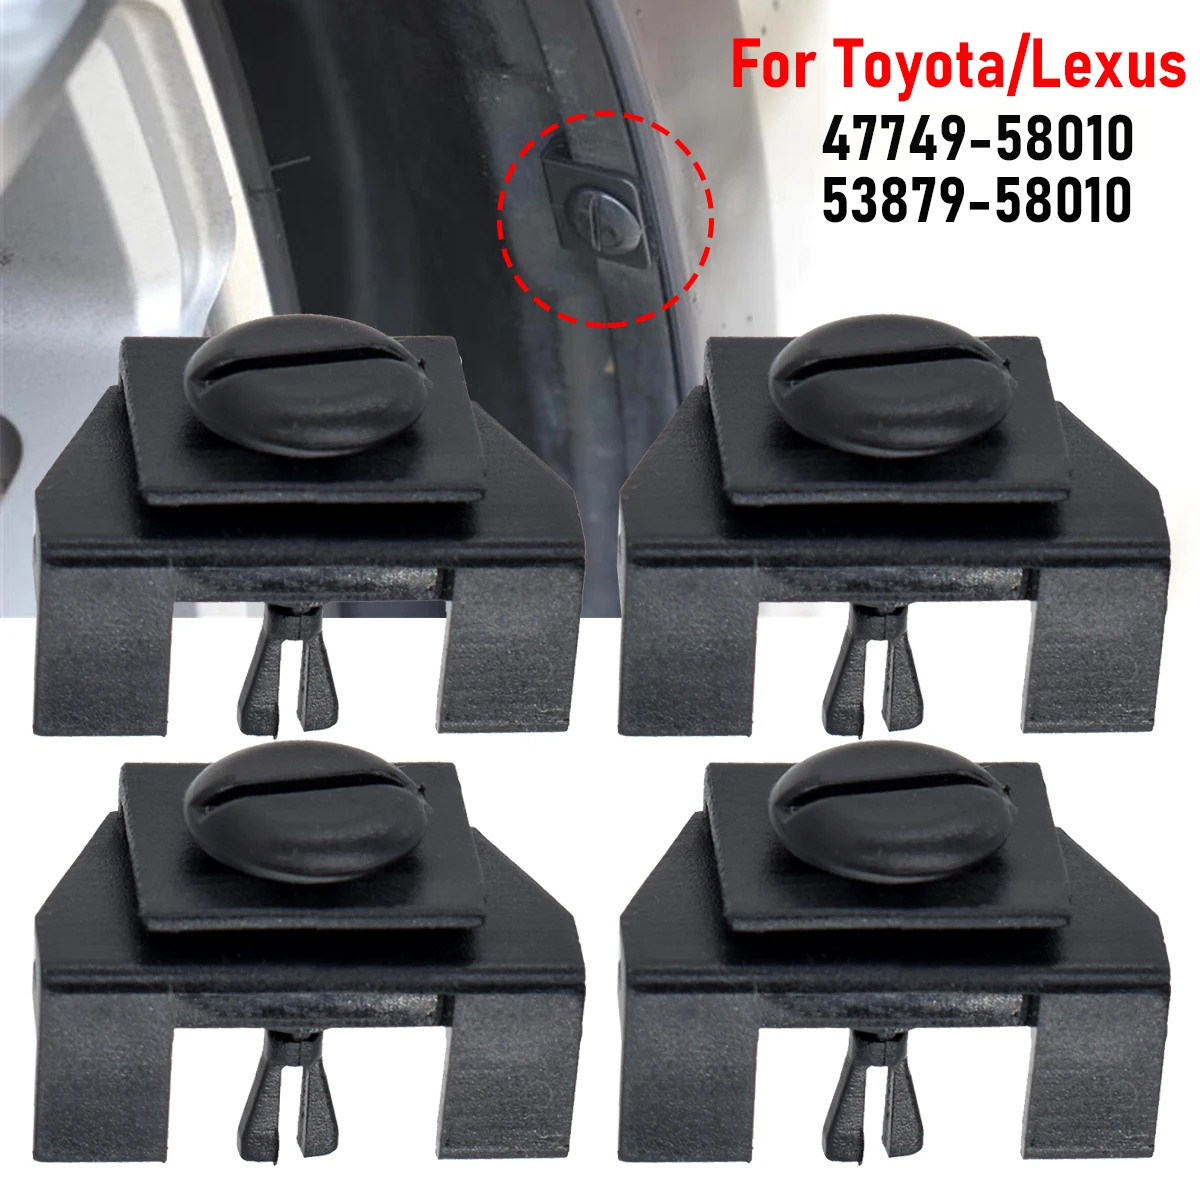 4 set car front fender bumper cover clip kit 53879 58010 47749 58010 for toyota lexus thumb200